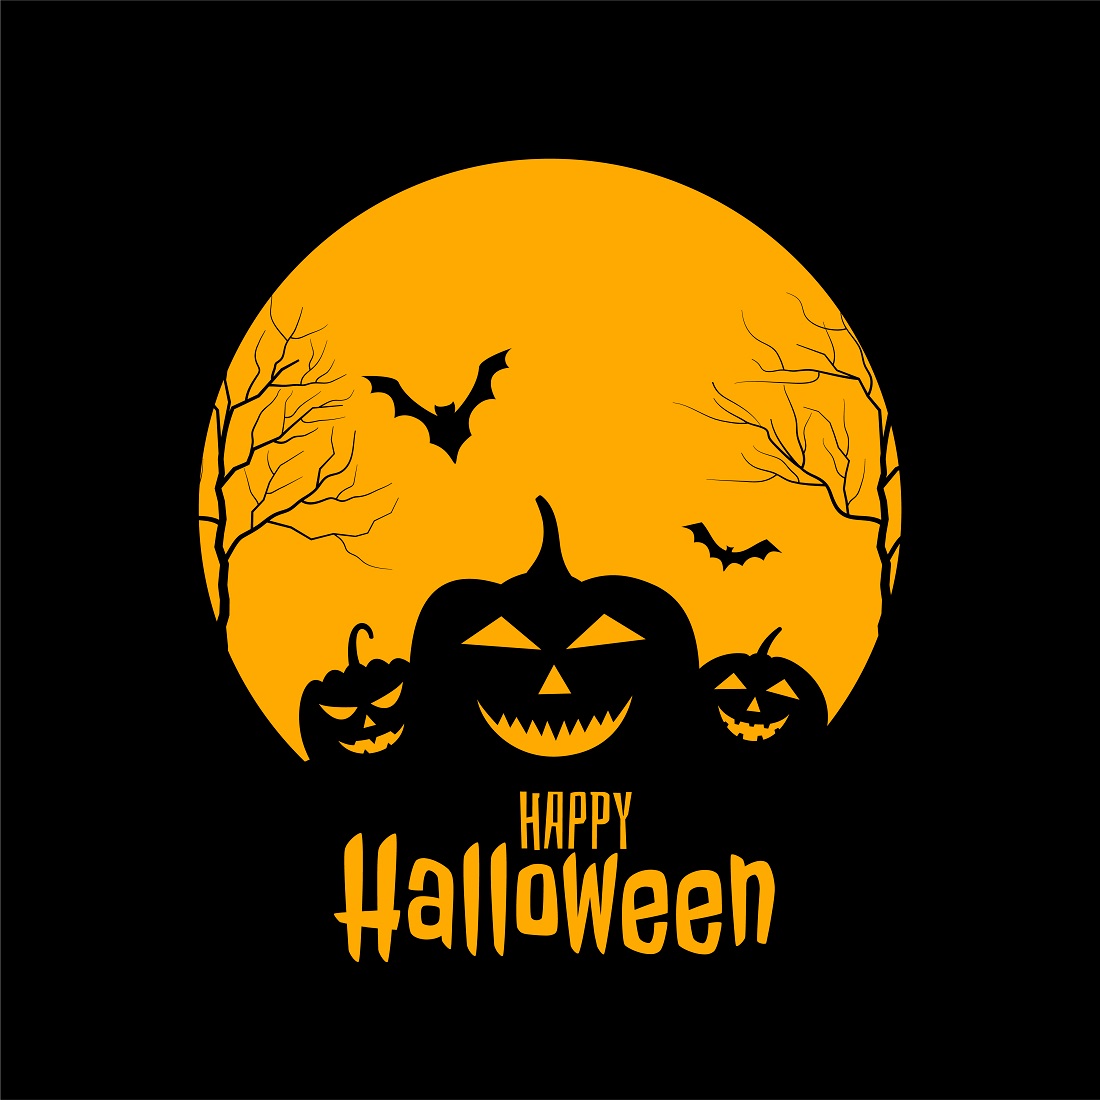 Happy Halloween scary black yellow design cover image.